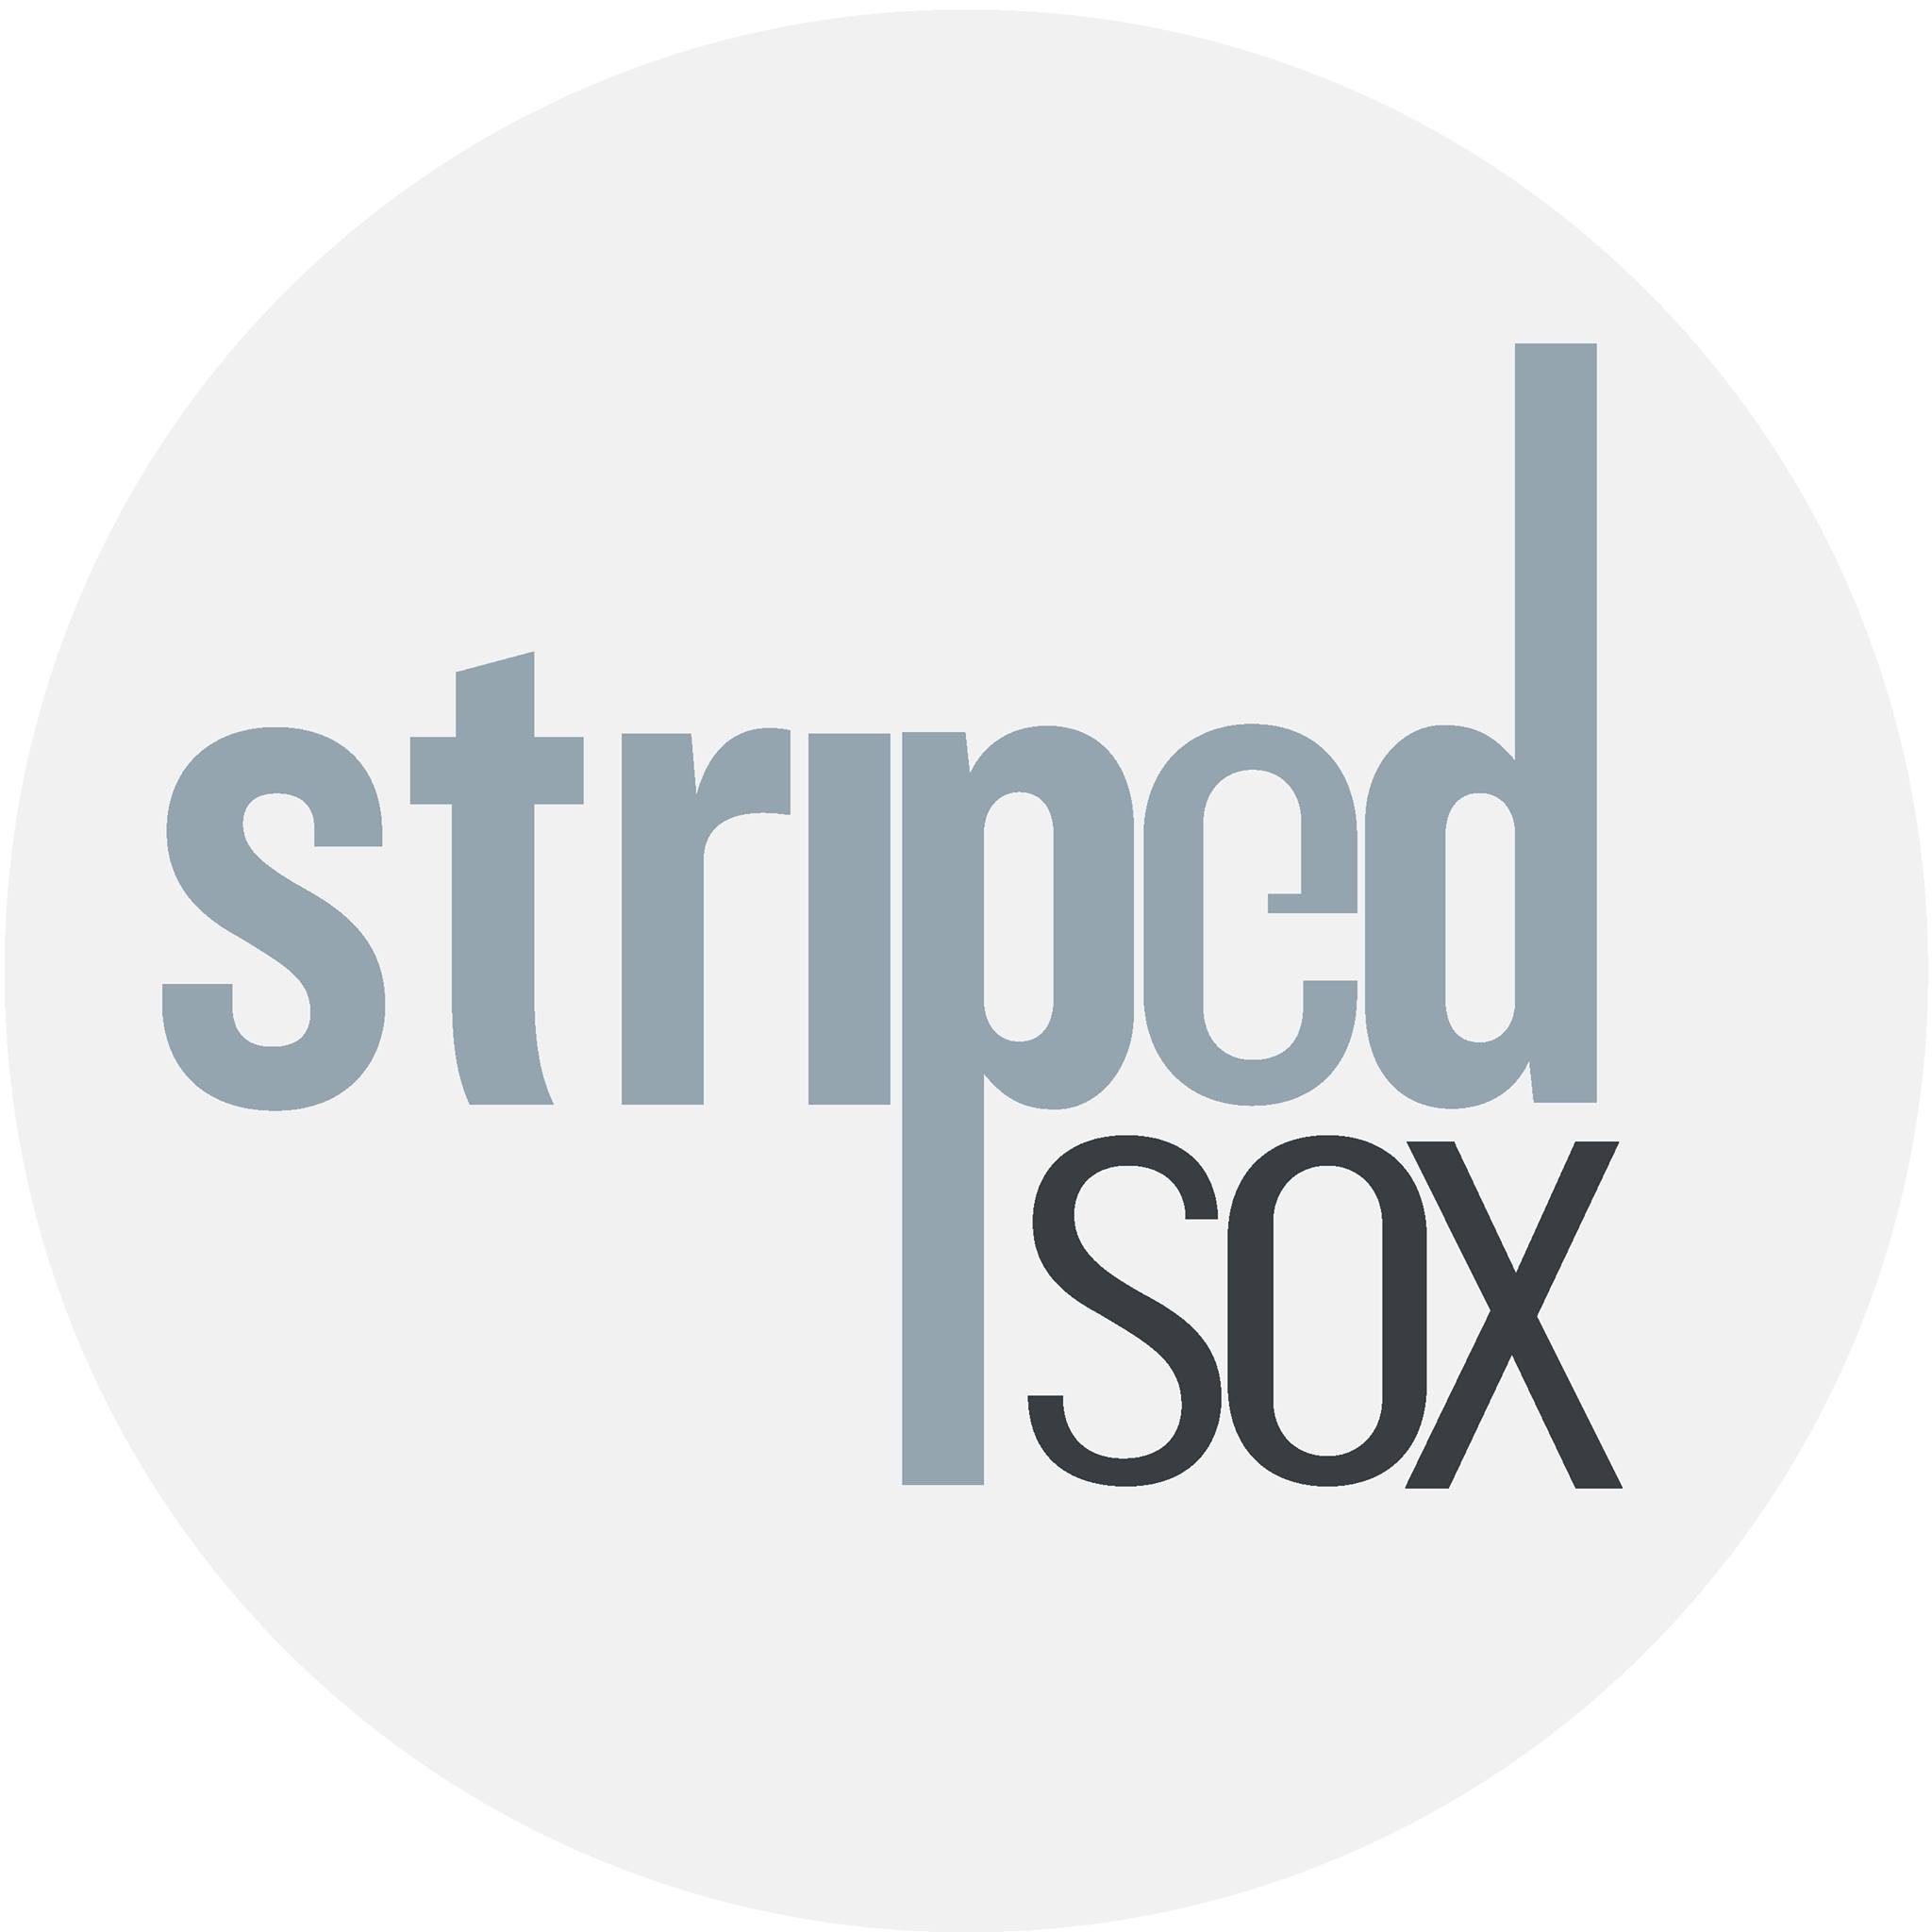 Striped Sox